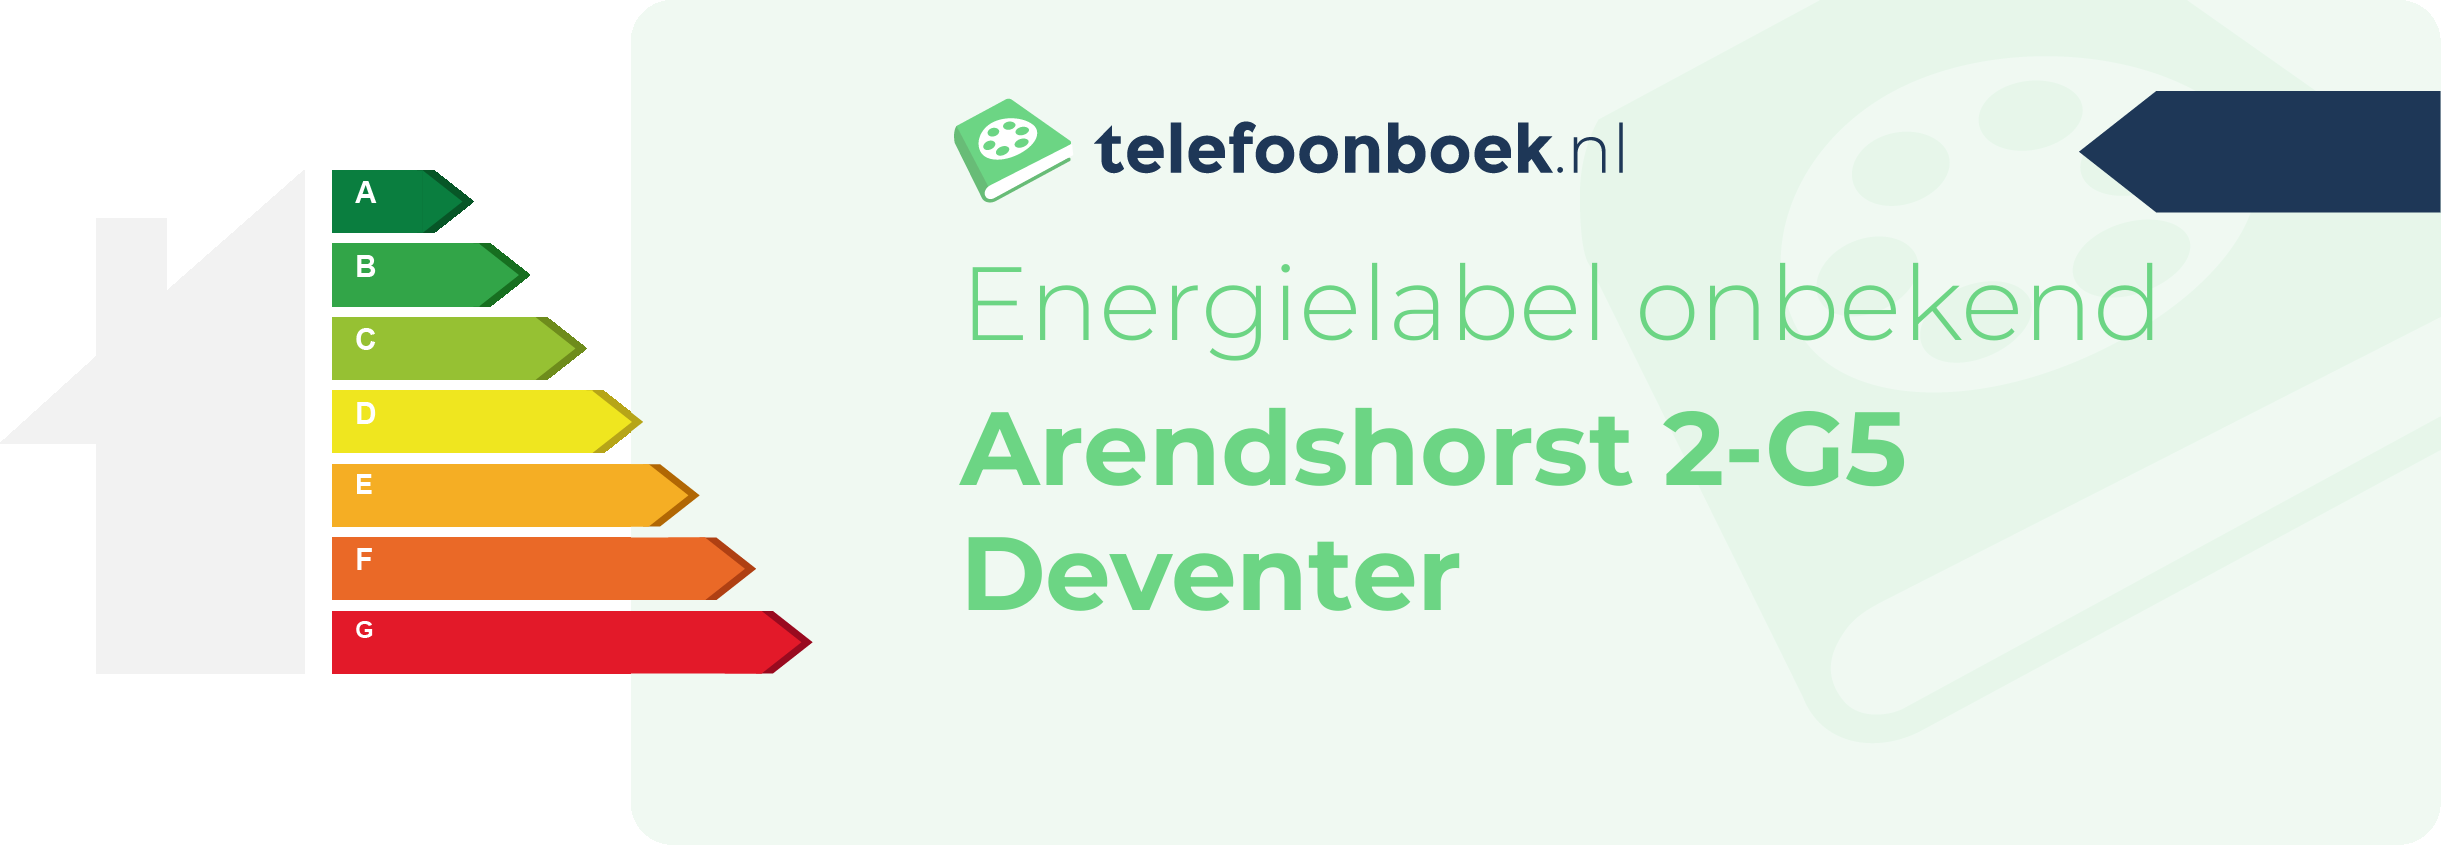 Energielabel Arendshorst 2-G5 Deventer